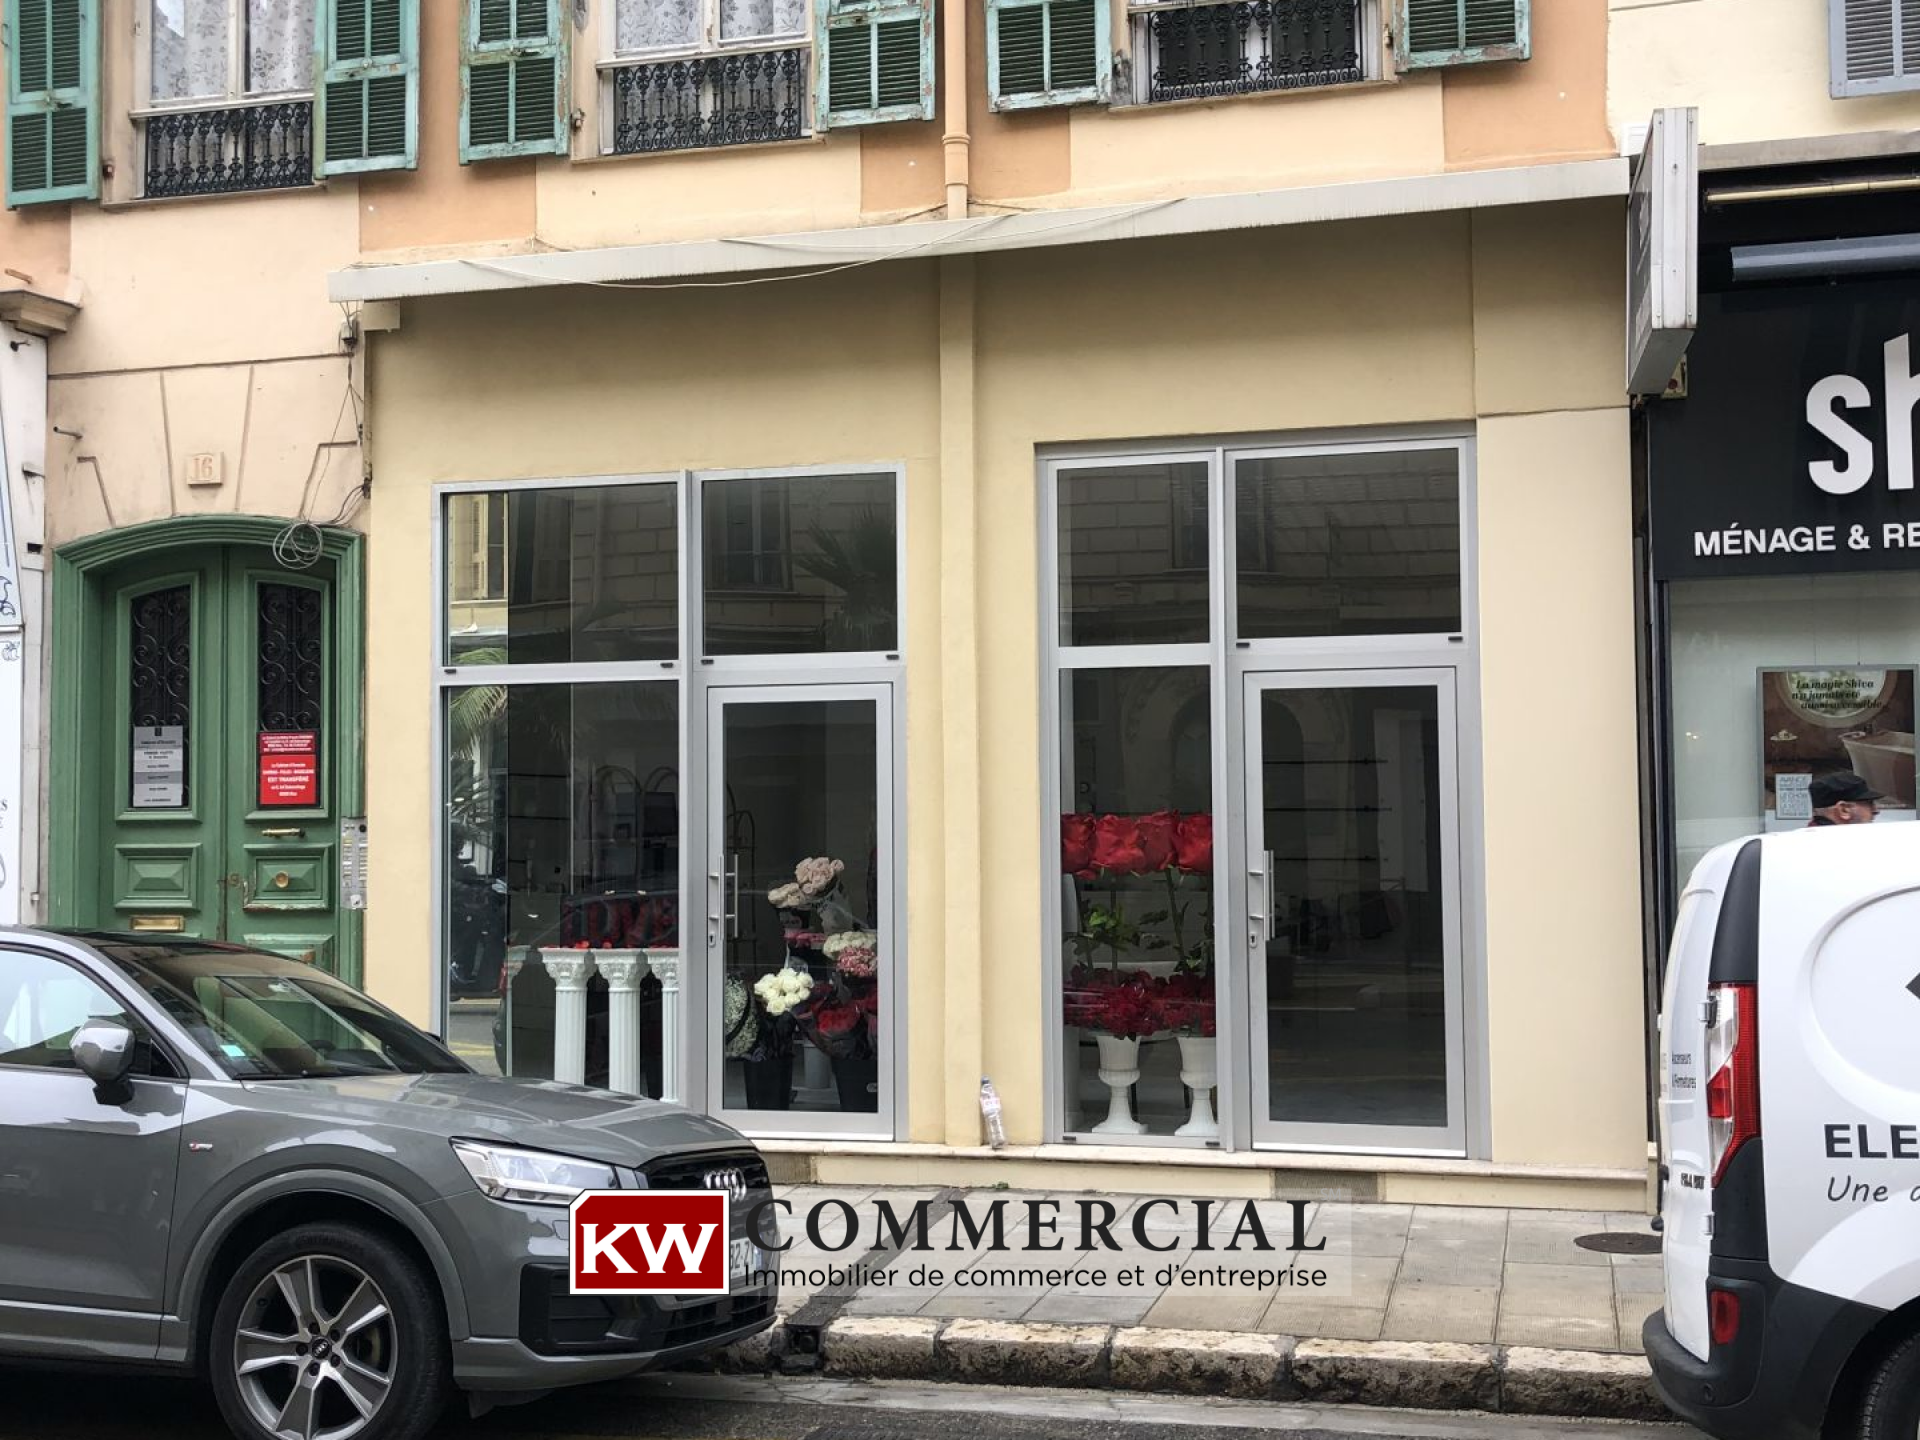 Vente local commercial 80m² à Nice rue Gioffredo